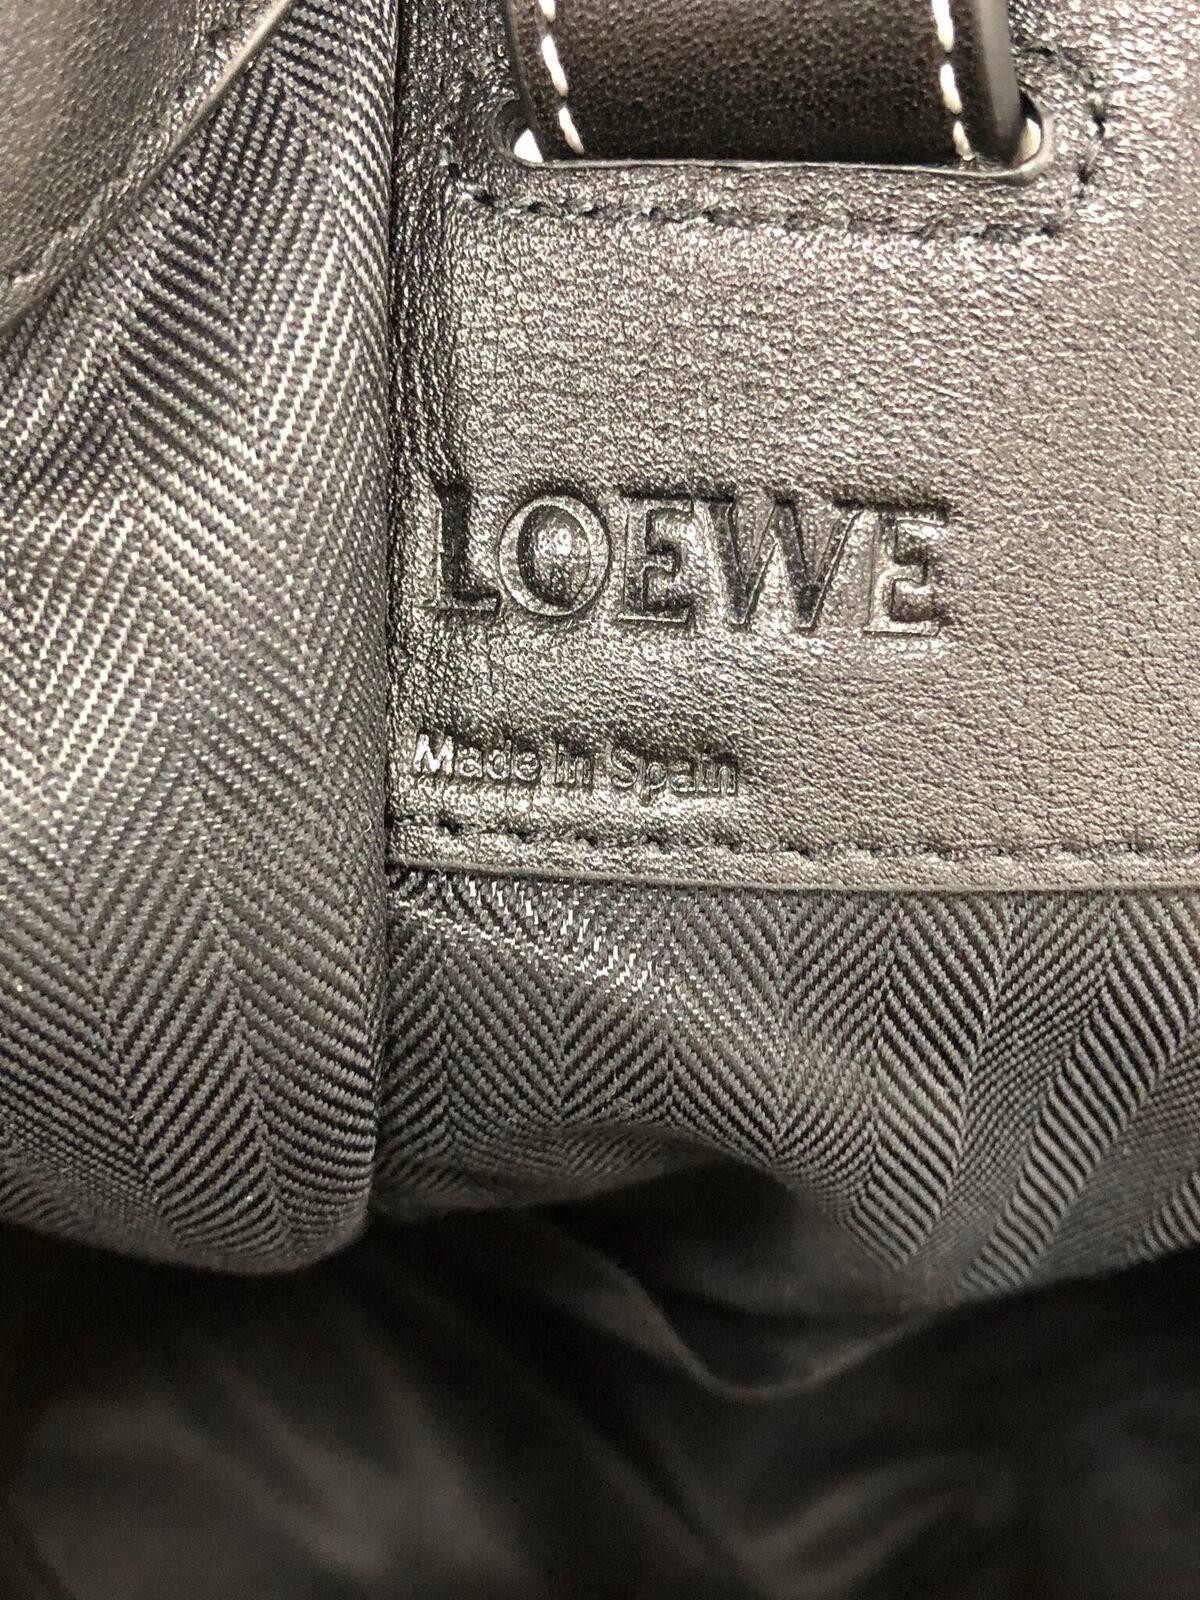 Loewe Hammock Bag Printed Leather Medium 2